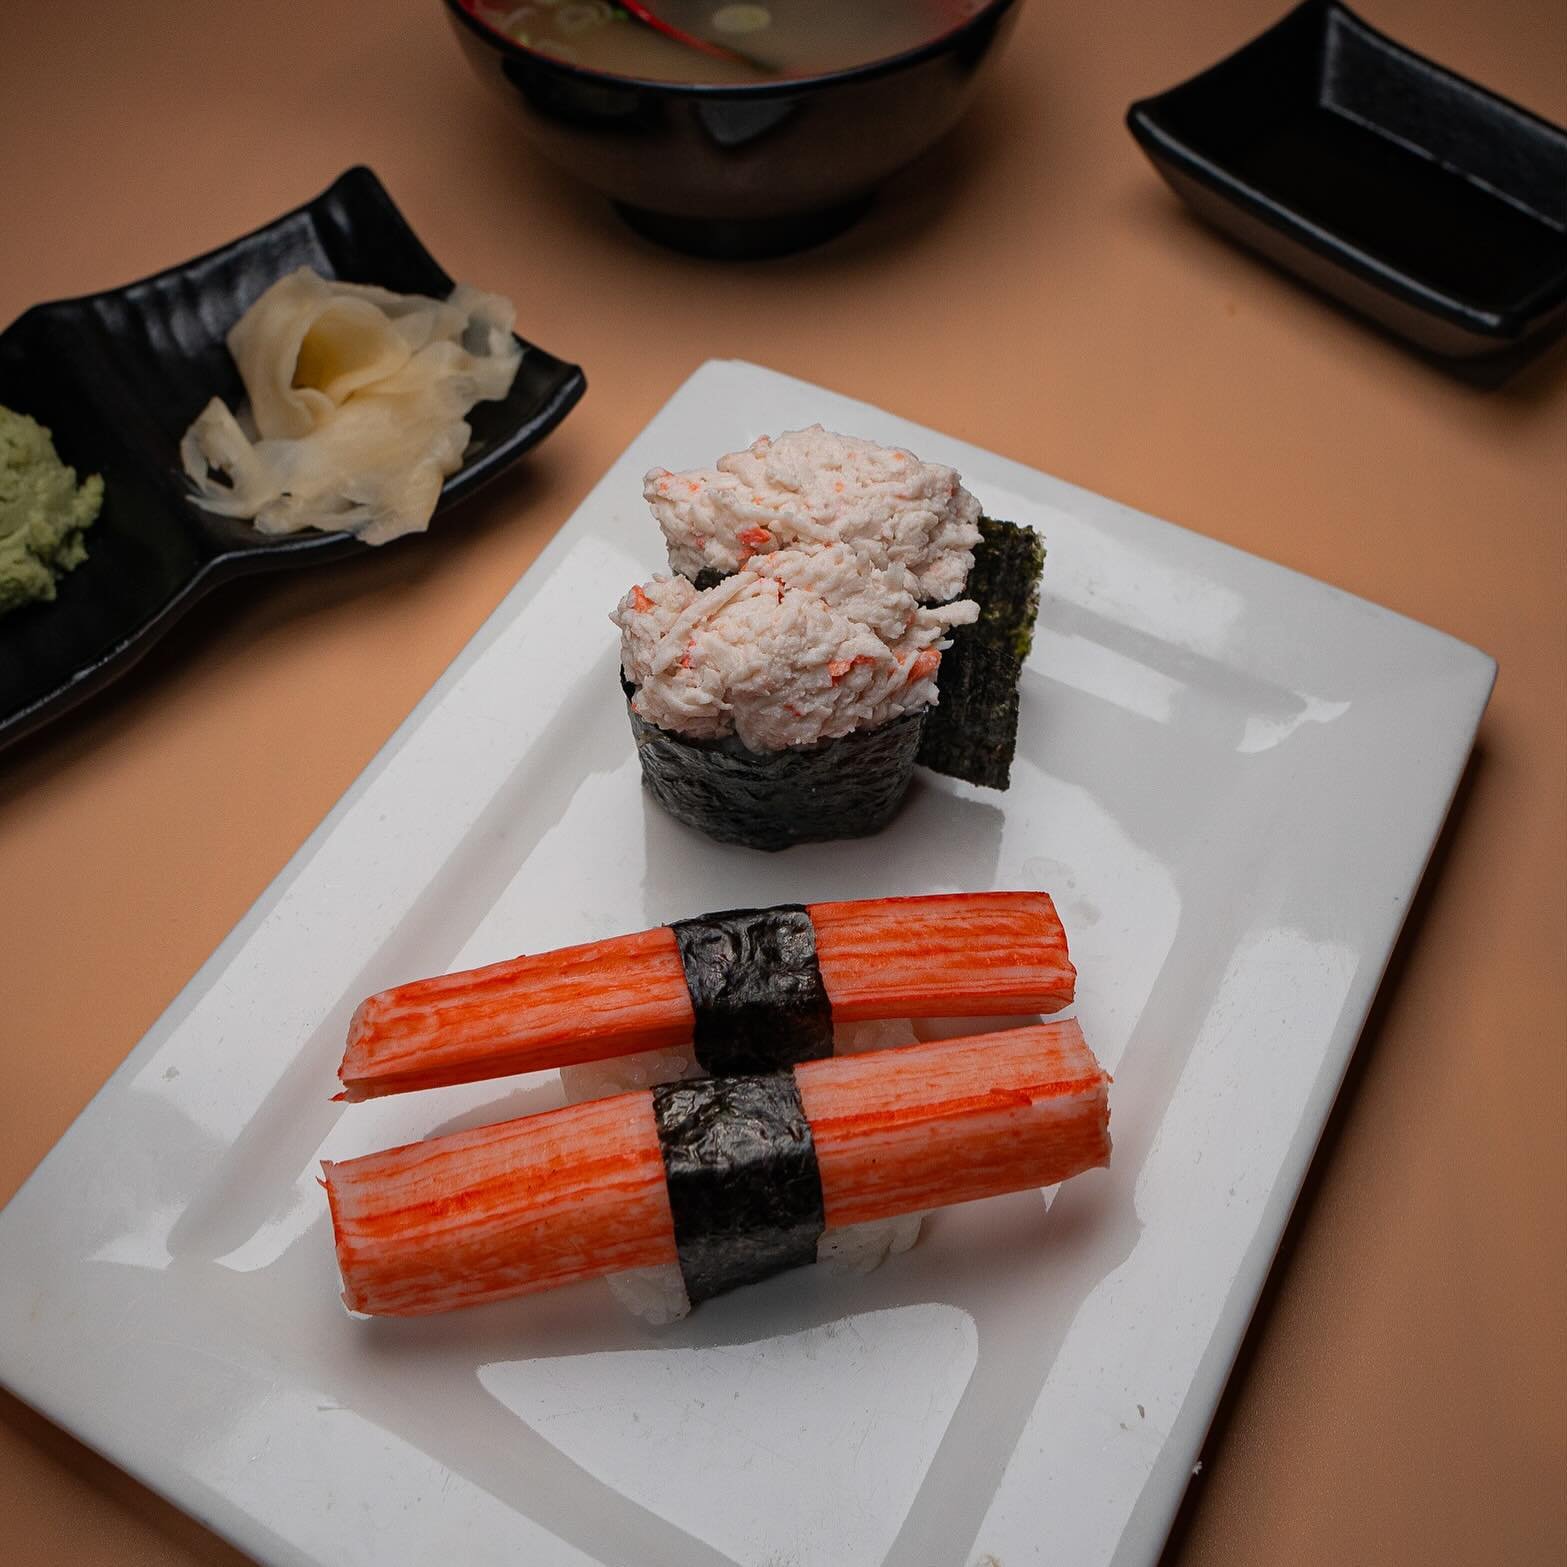 Savor the taste of tradition with each expertly crafted piece of sushi! Visit us today! #VegasEats 🍣😋 

◾◽◾◽◾◽◾◽◾◽
🍣 𝗔𝗬𝗖𝗘 𝗦𝗨𝗦𝗛𝗜 𝗠𝗢𝗡 𝗠𝗔𝗥𝗬𝗟𝗔𝗡𝗗
⏰ ᴅᴀɪʟʏ: 12:00 ᴘᴍ - 11:00 ᴘᴍ
⏰ ʟᴀꜱᴛ ꜱᴇᴀᴛɪɴɢ ꜰᴏʀ ᴀʏᴄᴇ 10ᴘᴍ
⏰ ʟᴀꜱᴛᴏʀᴅᴇʀ10:30ᴘᴍ 
📍 9770 